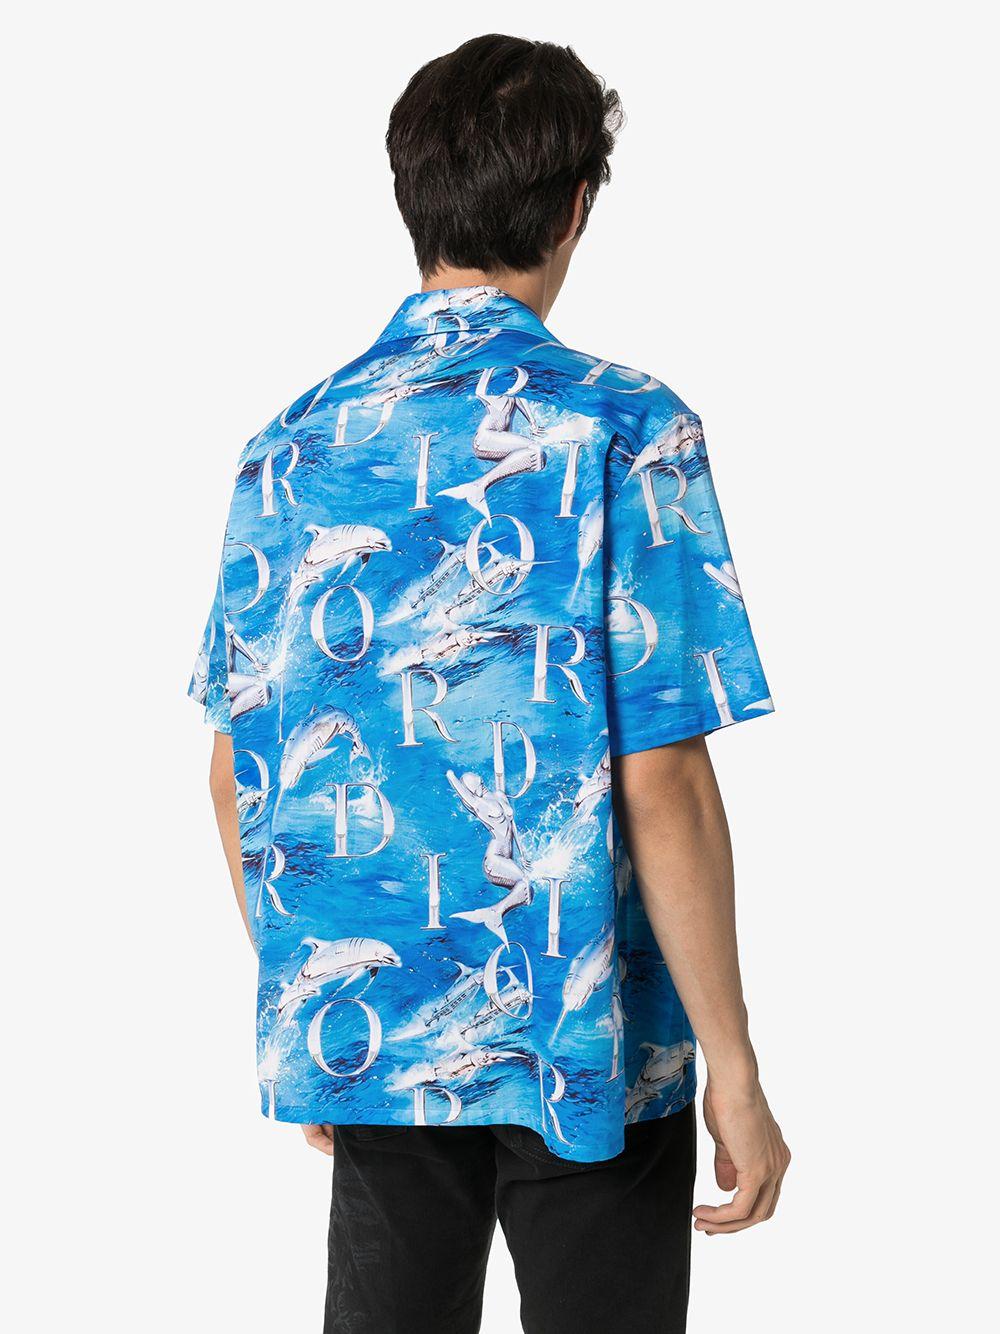 Dior Homme 2022 Animal Print T-Shirt - Blue T-Shirts, Clothing